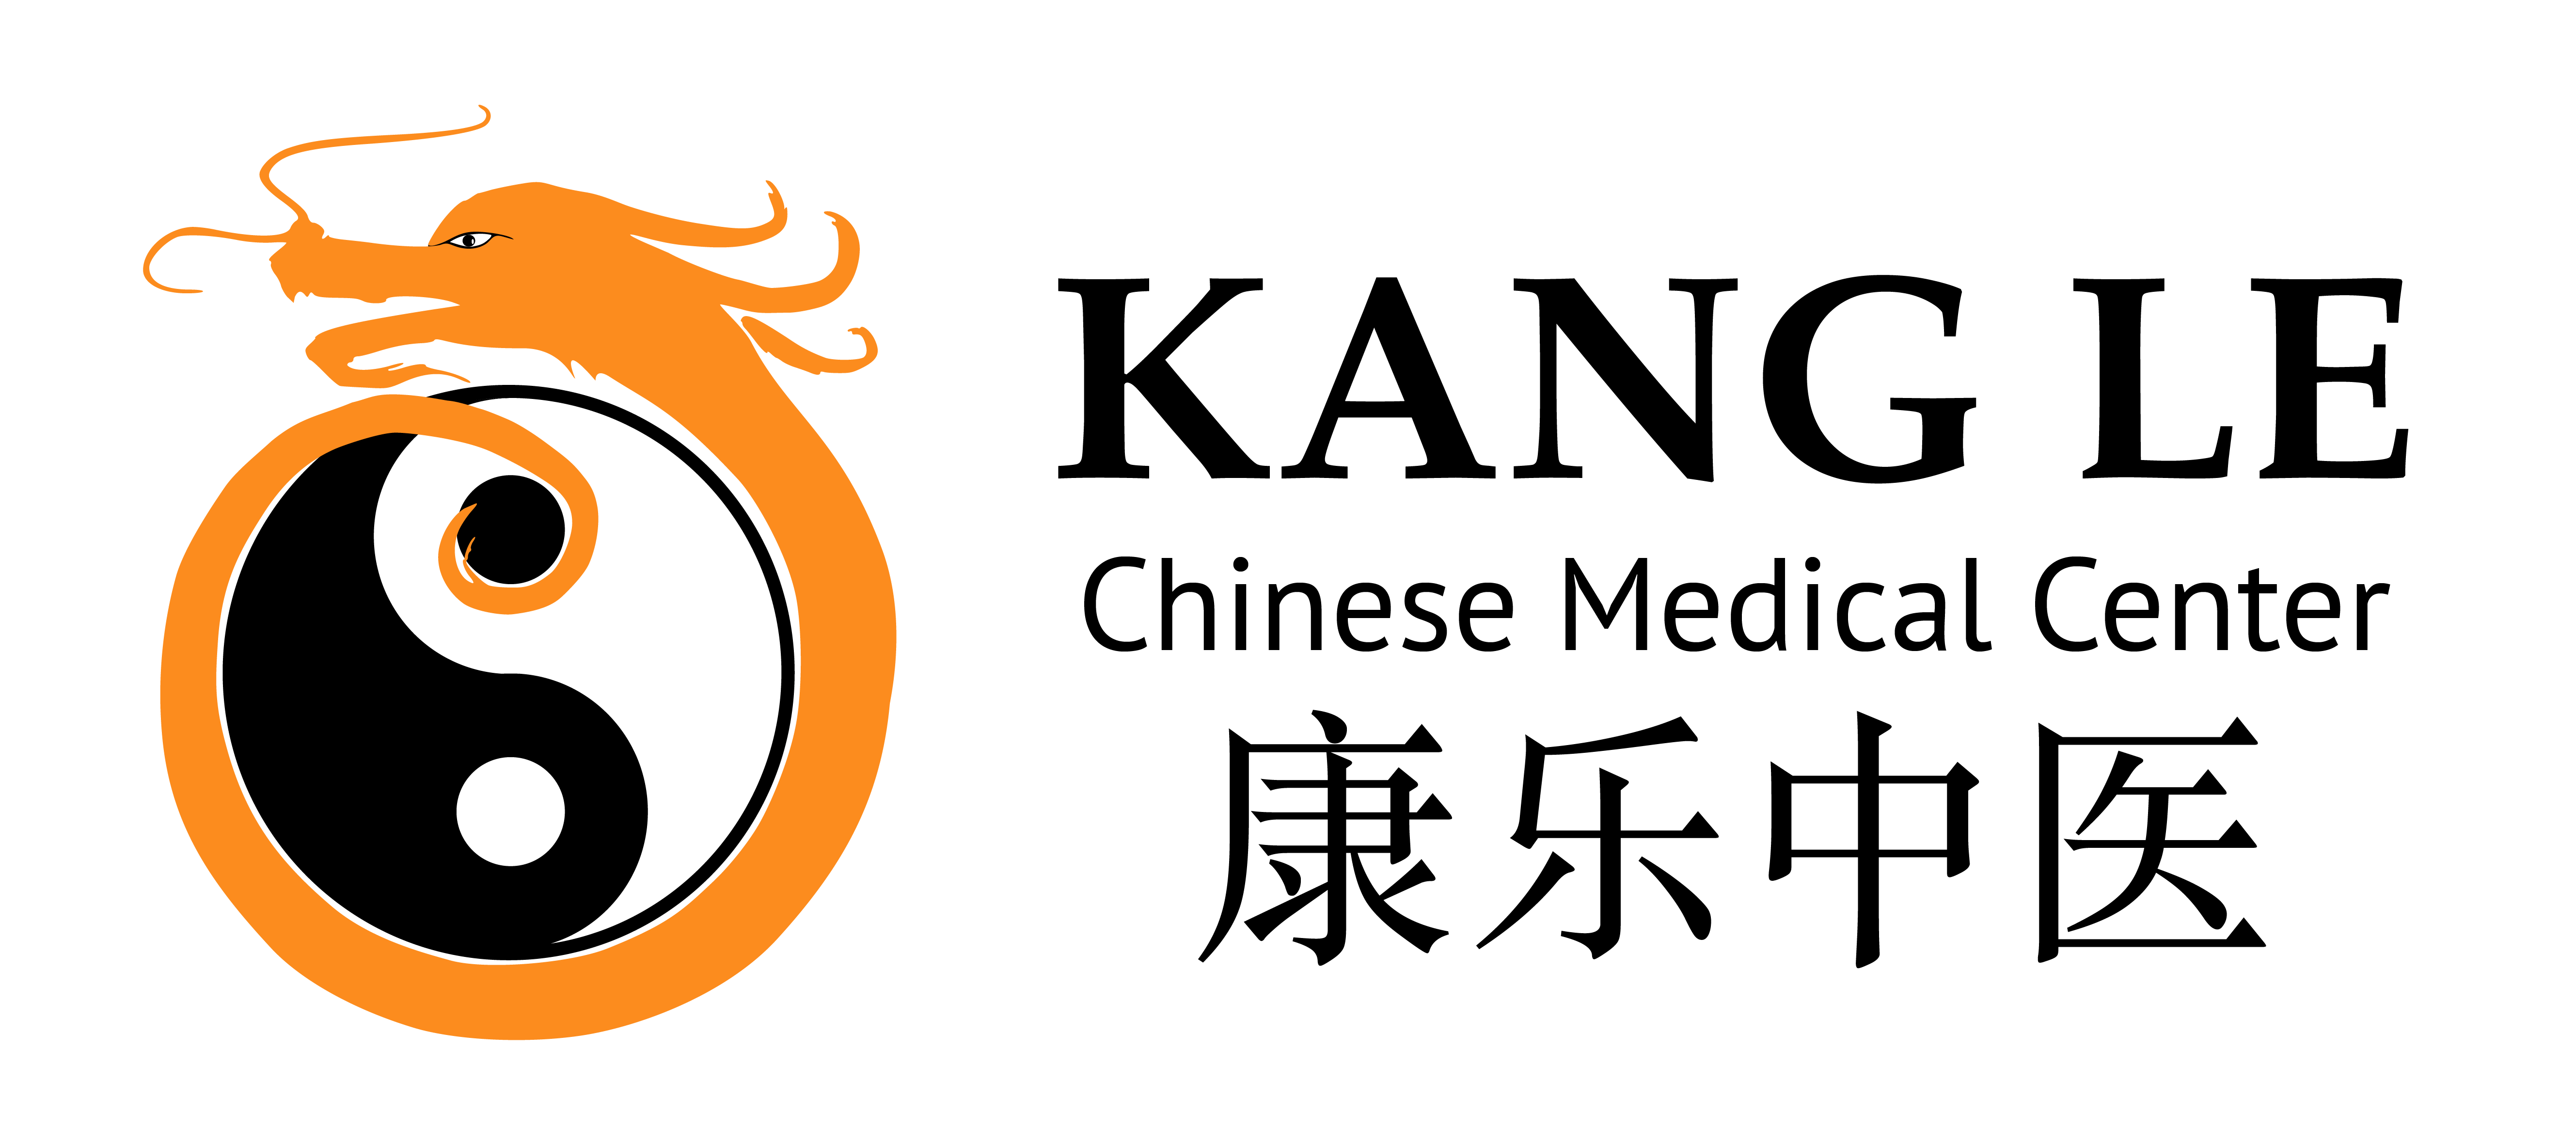 Kang Le Chinese Medical Center